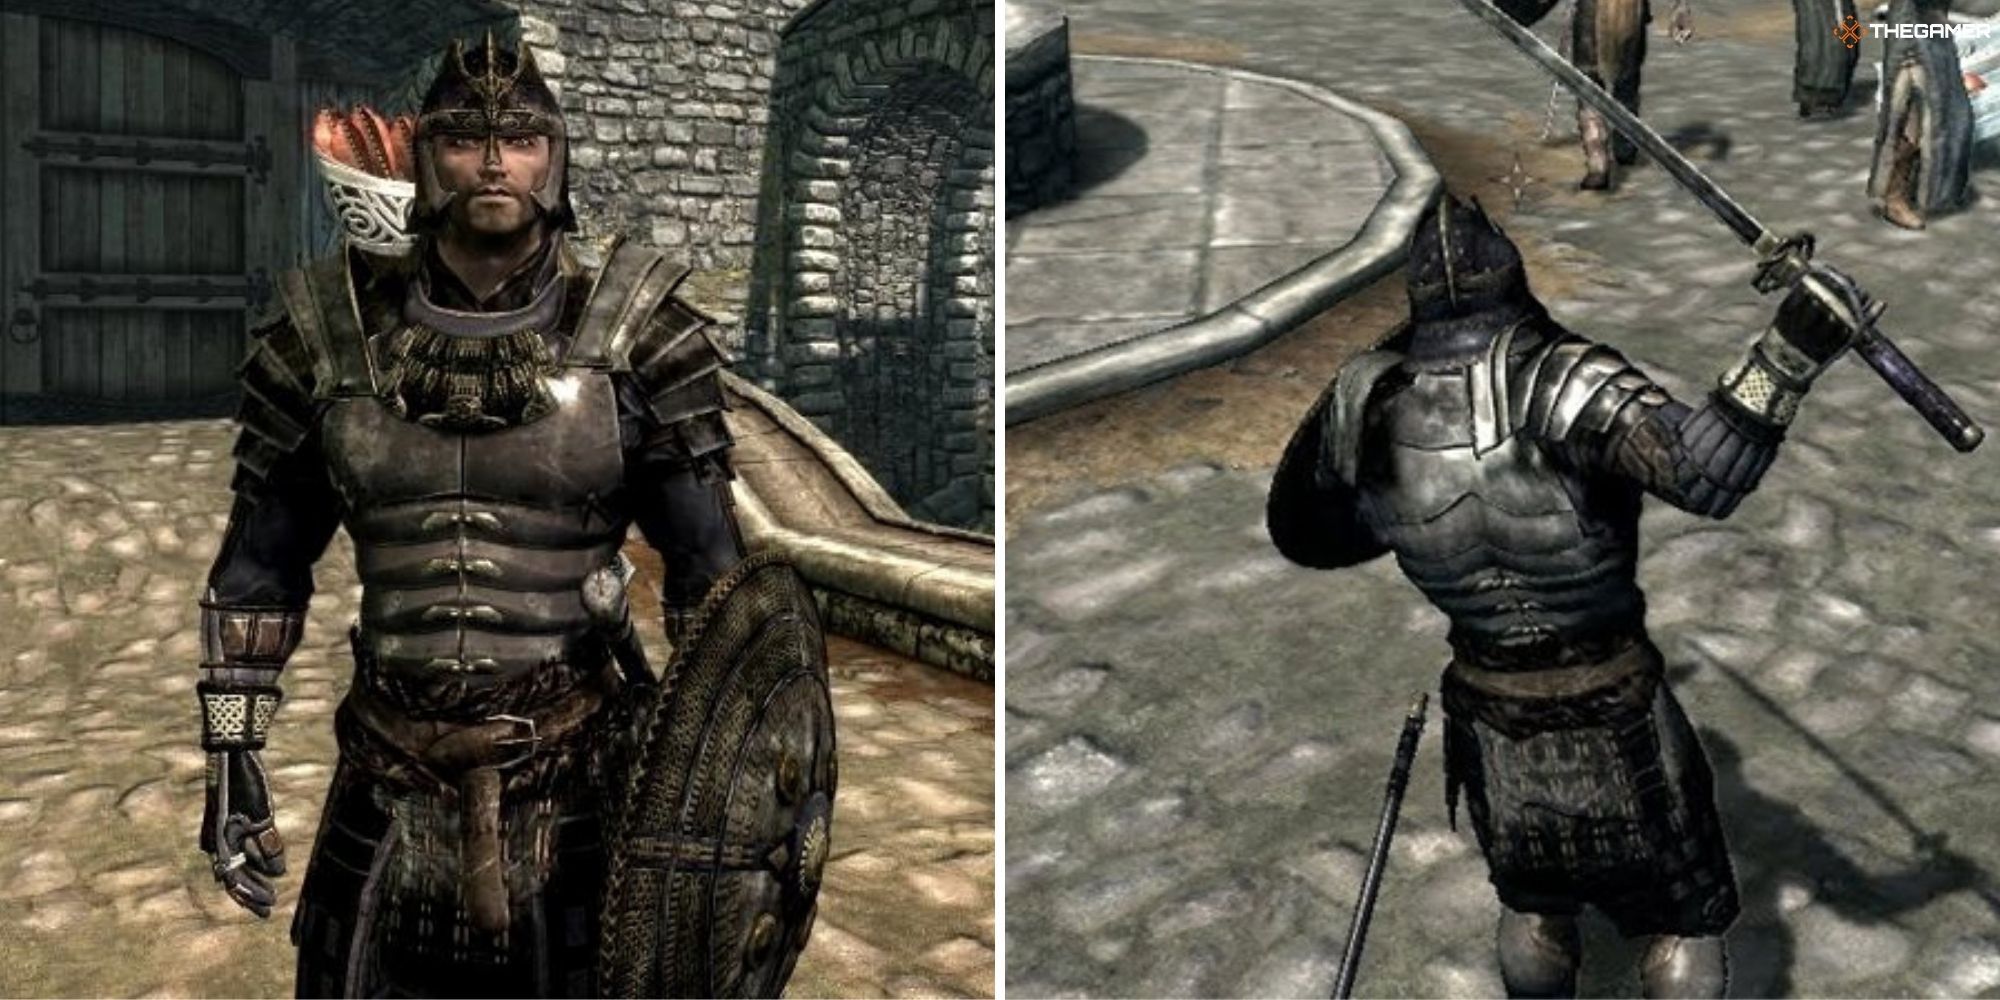 Skyrim - Blades Armor worn by the player, split image